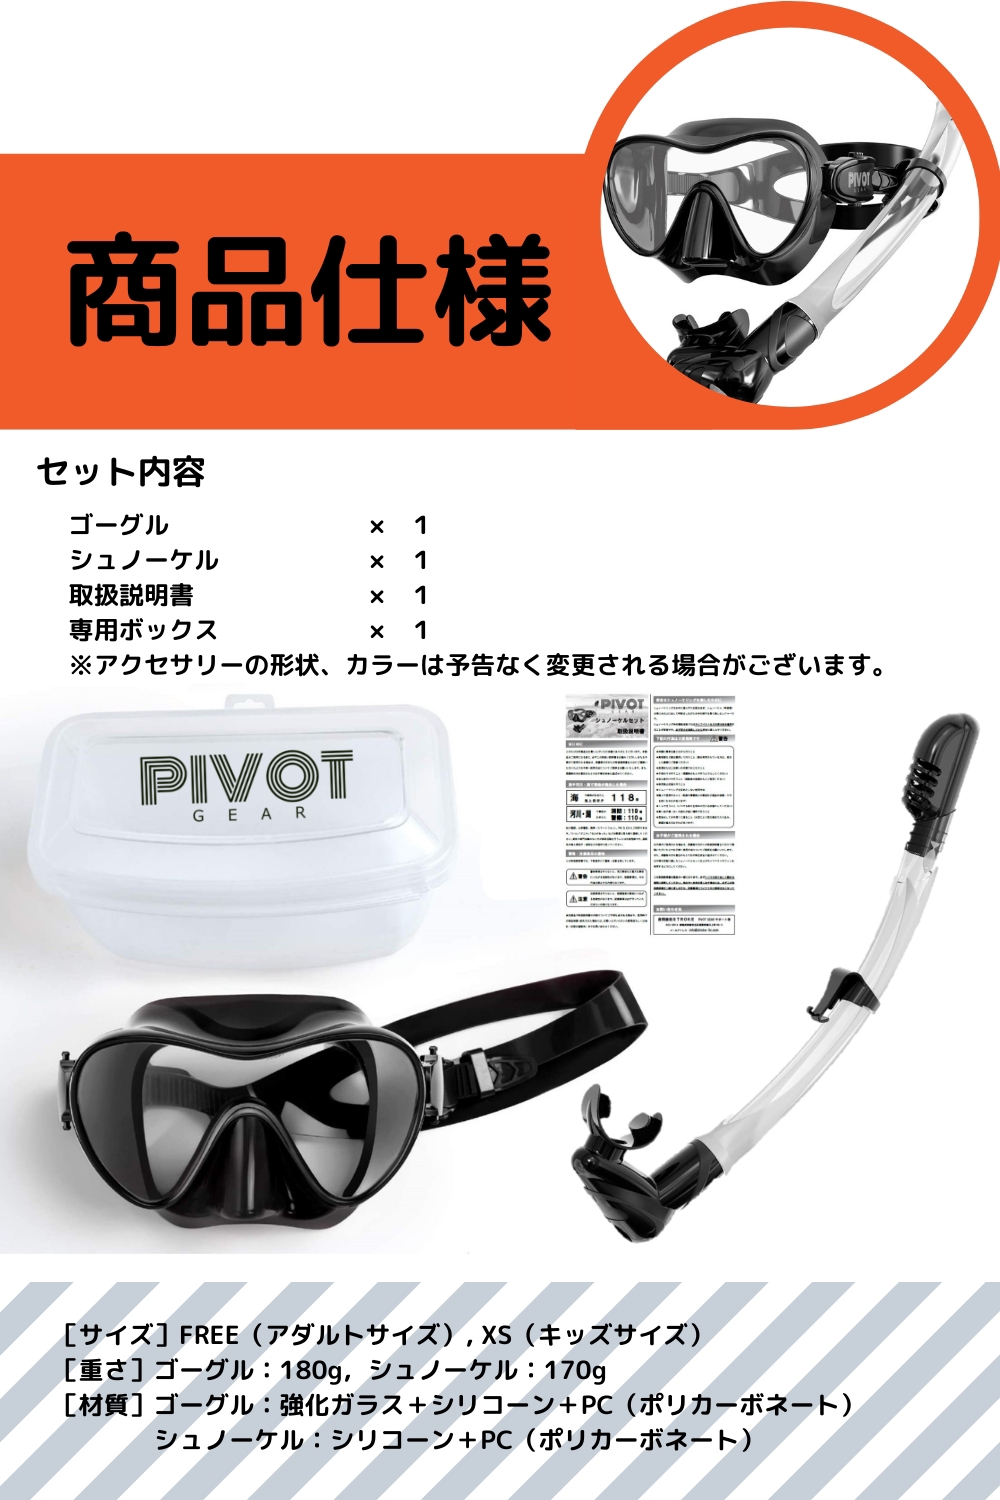 PIVOT-GEAR シュノーケルセット 専用BOX付き | 合同会社STROKE